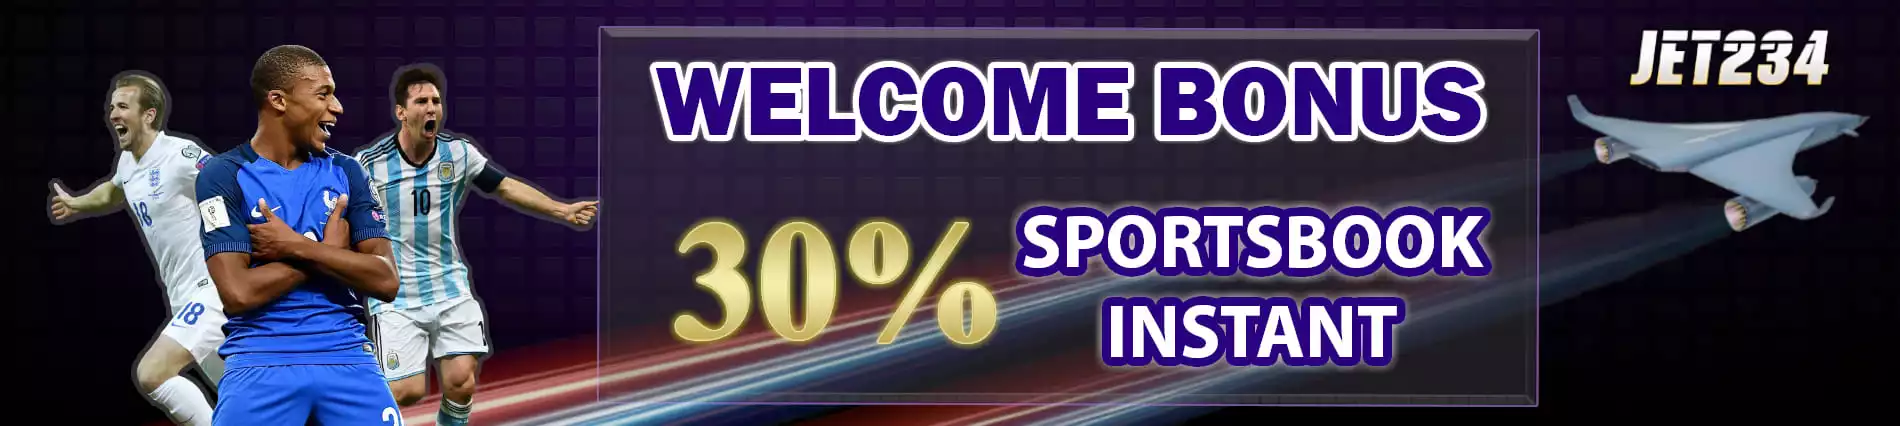 Welcome Bonus 30% Sportsbook